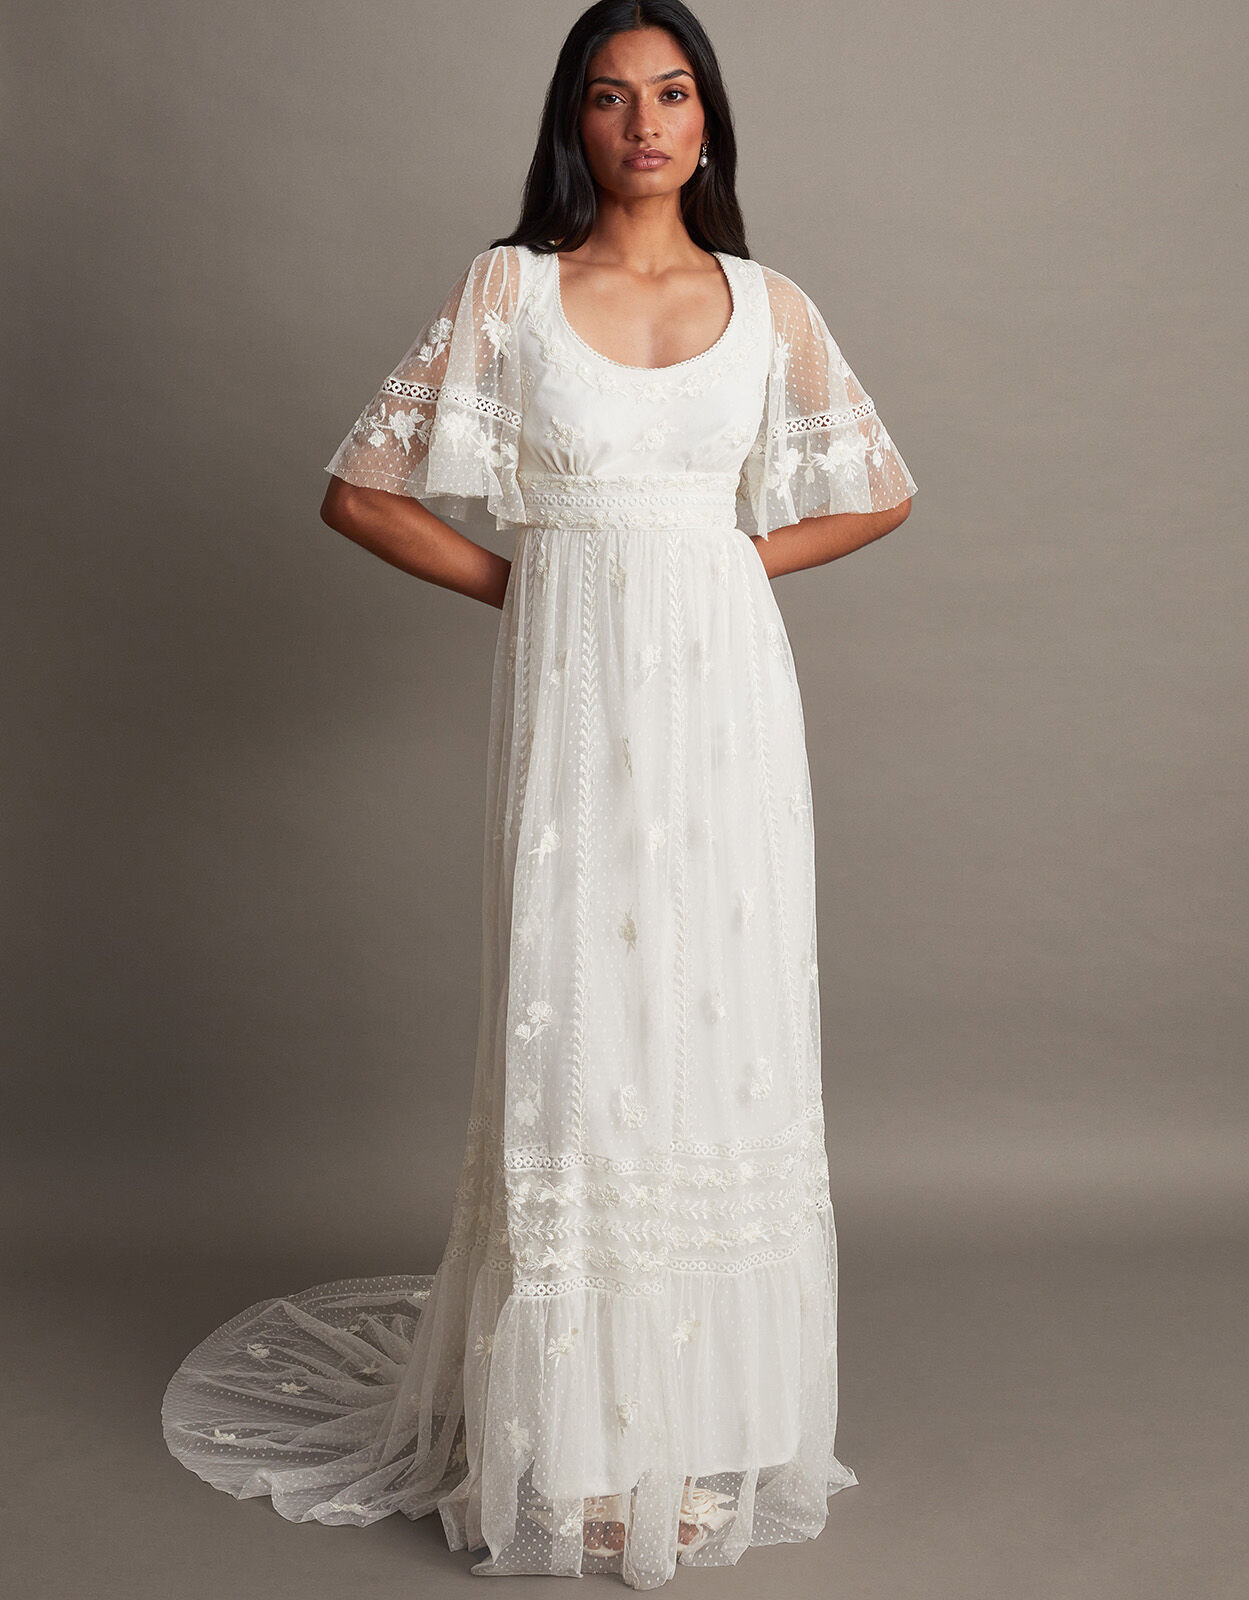 Plus Size Gothic Wedding Dresses Black Off the Shoulder Ruffles Lace Bridal  Gown | eBay